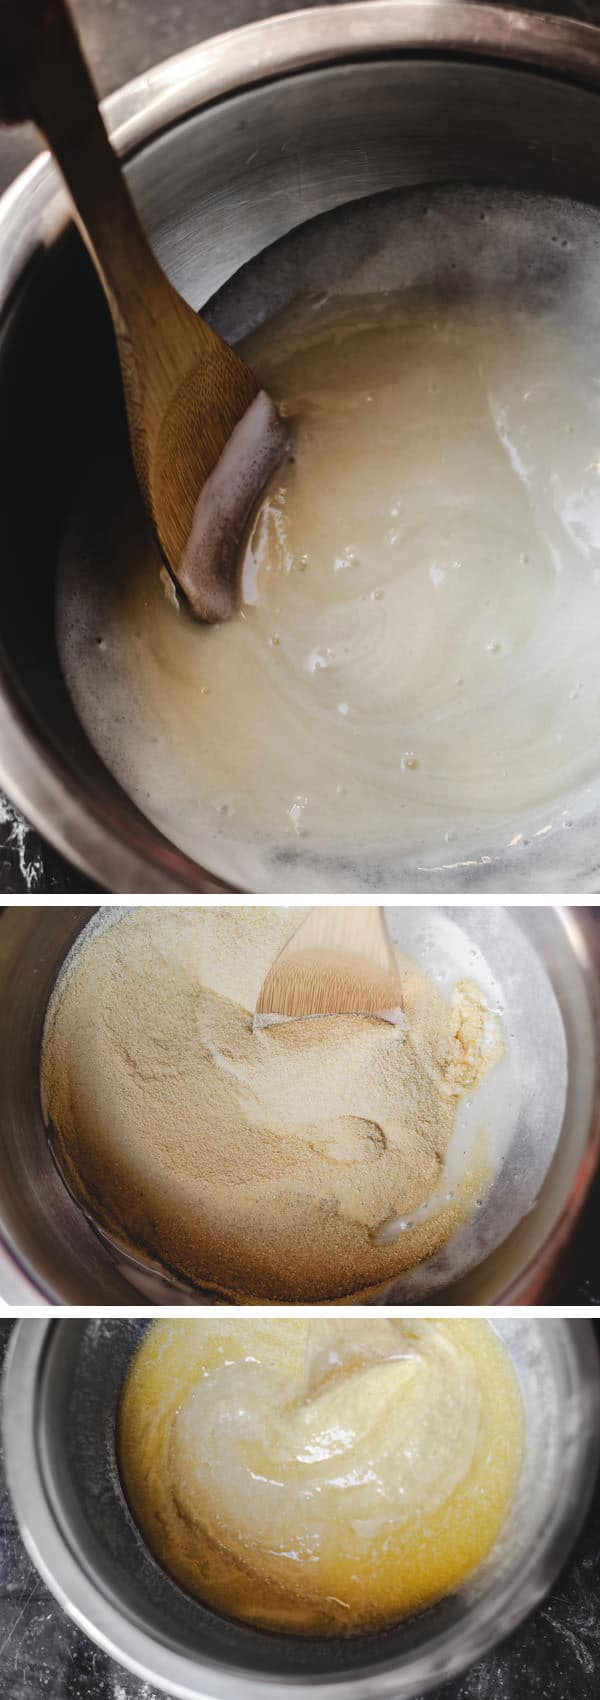 Sugar, yogurt, semolina, baking powder, milk and butter combined in a pot in a step-wise fashion